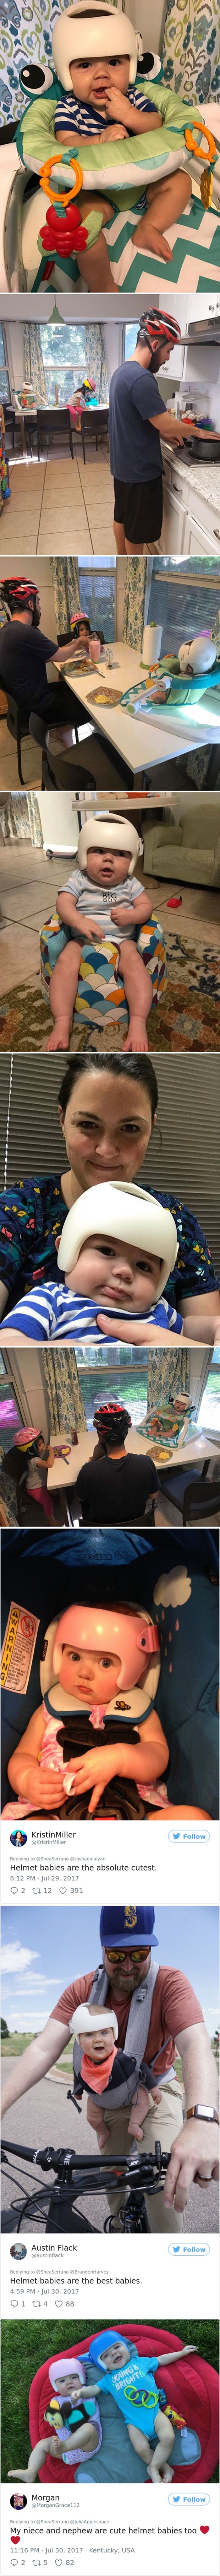 Beba je morala nositi kacigu na glavi pa joj se pridružila cijela obitelj i osvojila srca tisuća ljudi